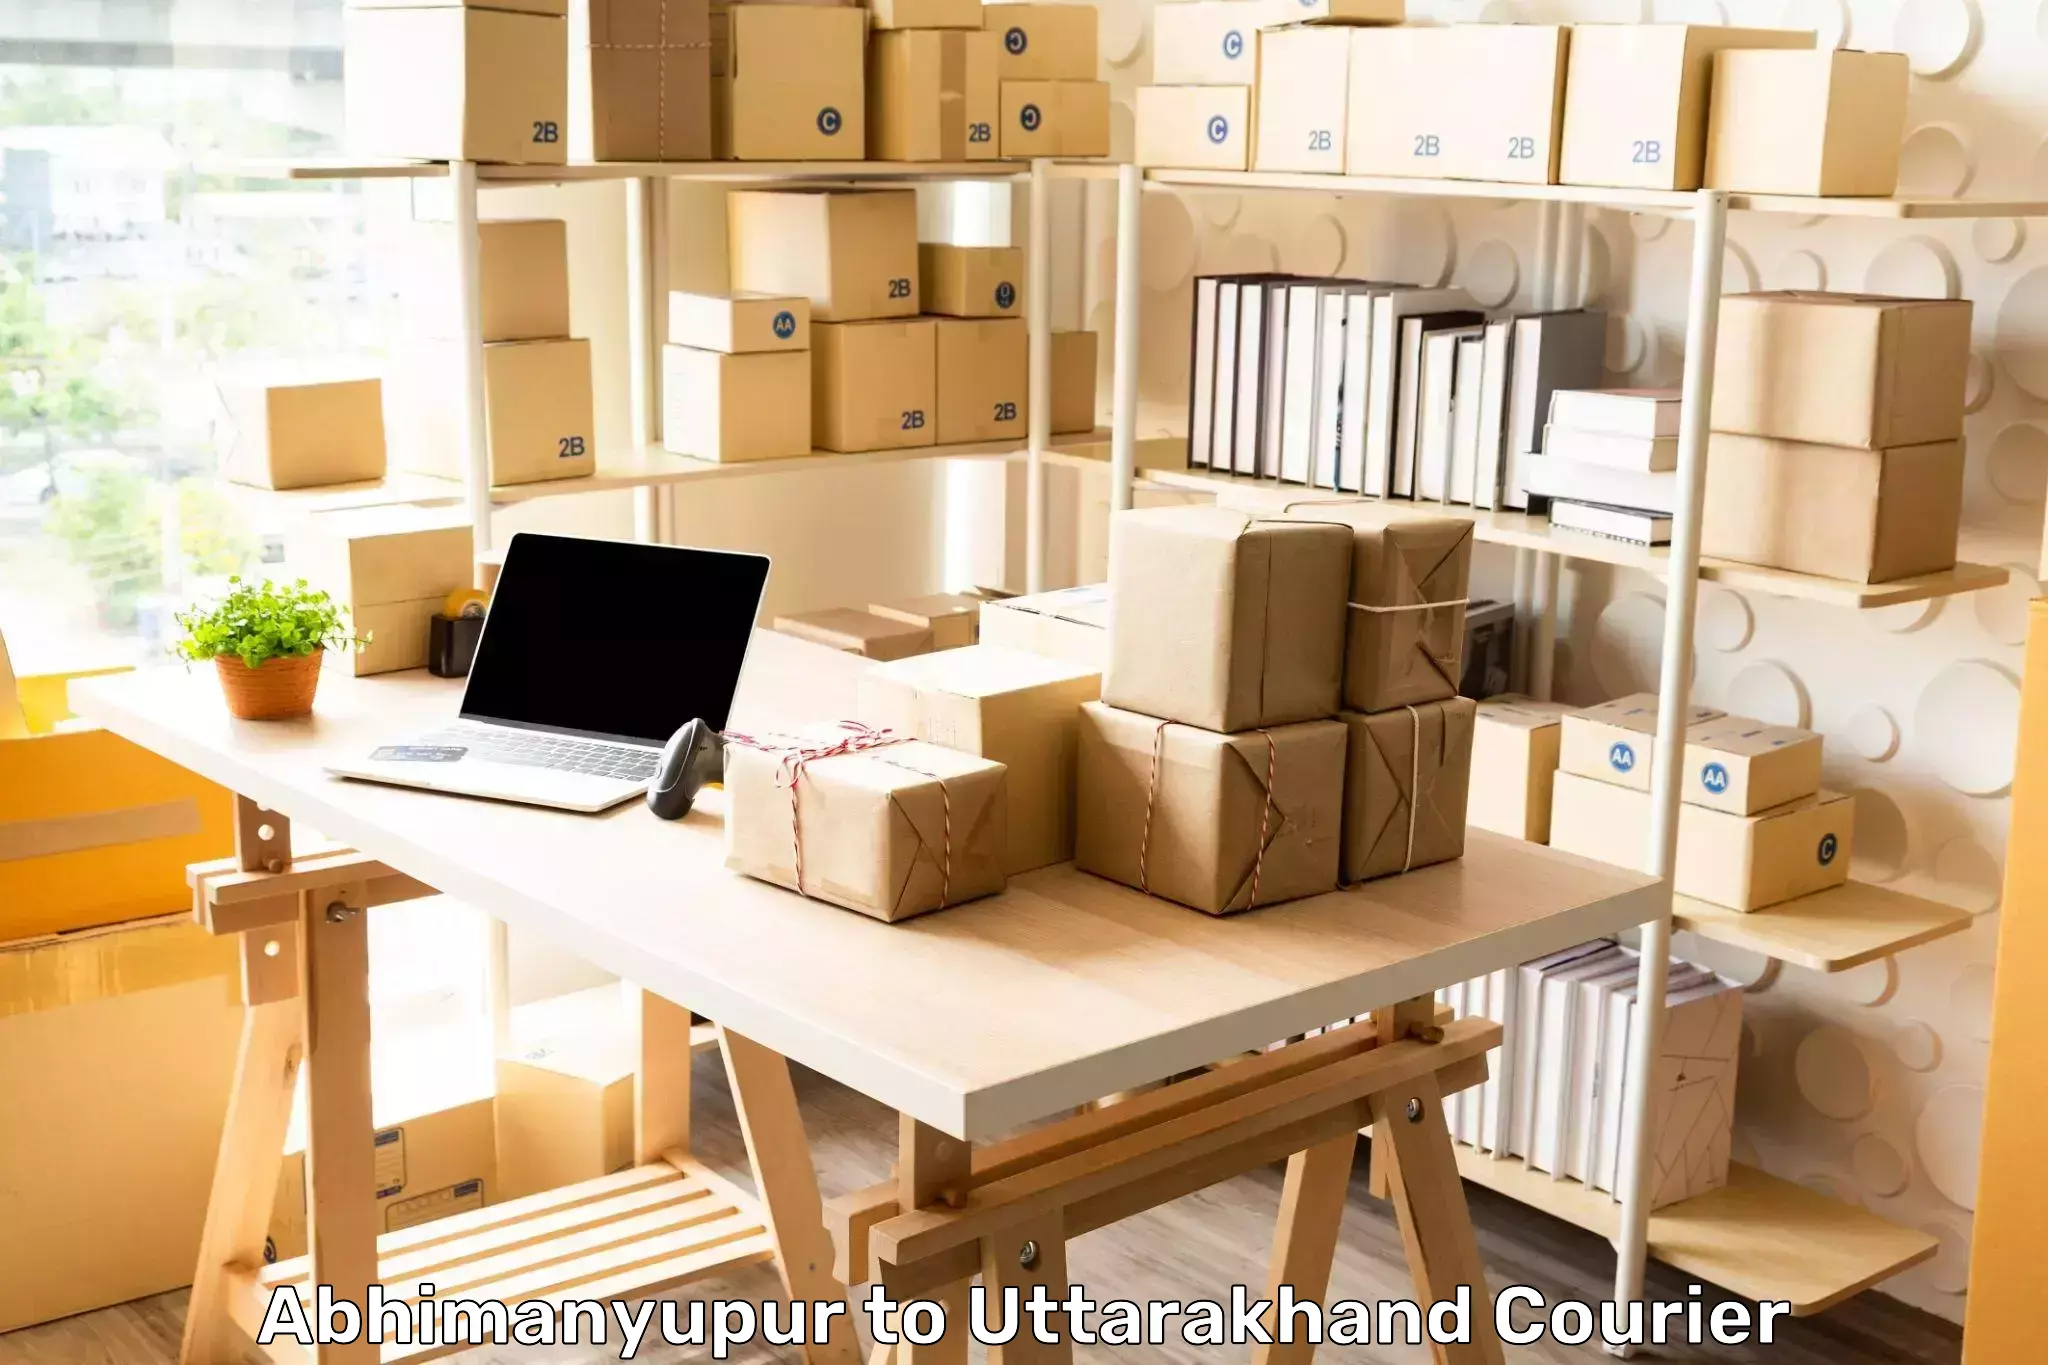 Efficient logistics management Abhimanyupur to Pauri